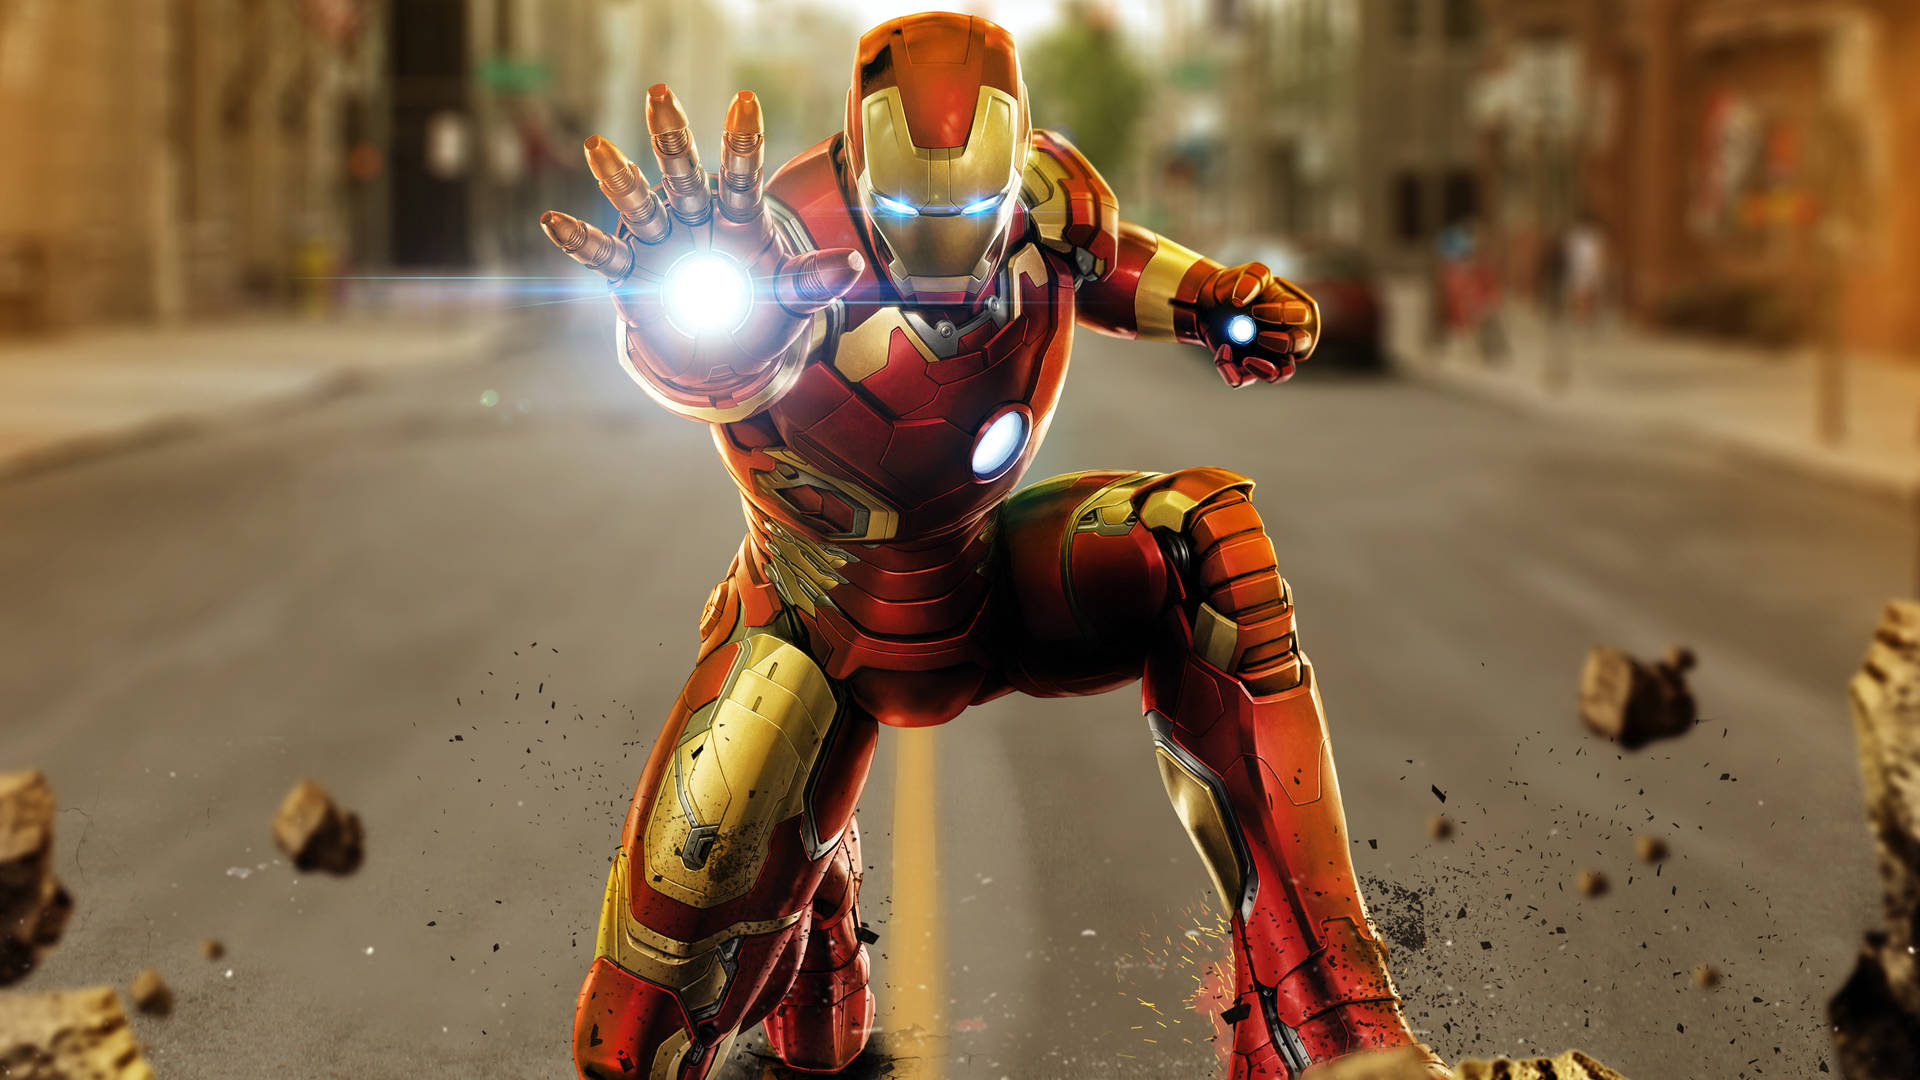 Cool Iron Man Repulsor Blast